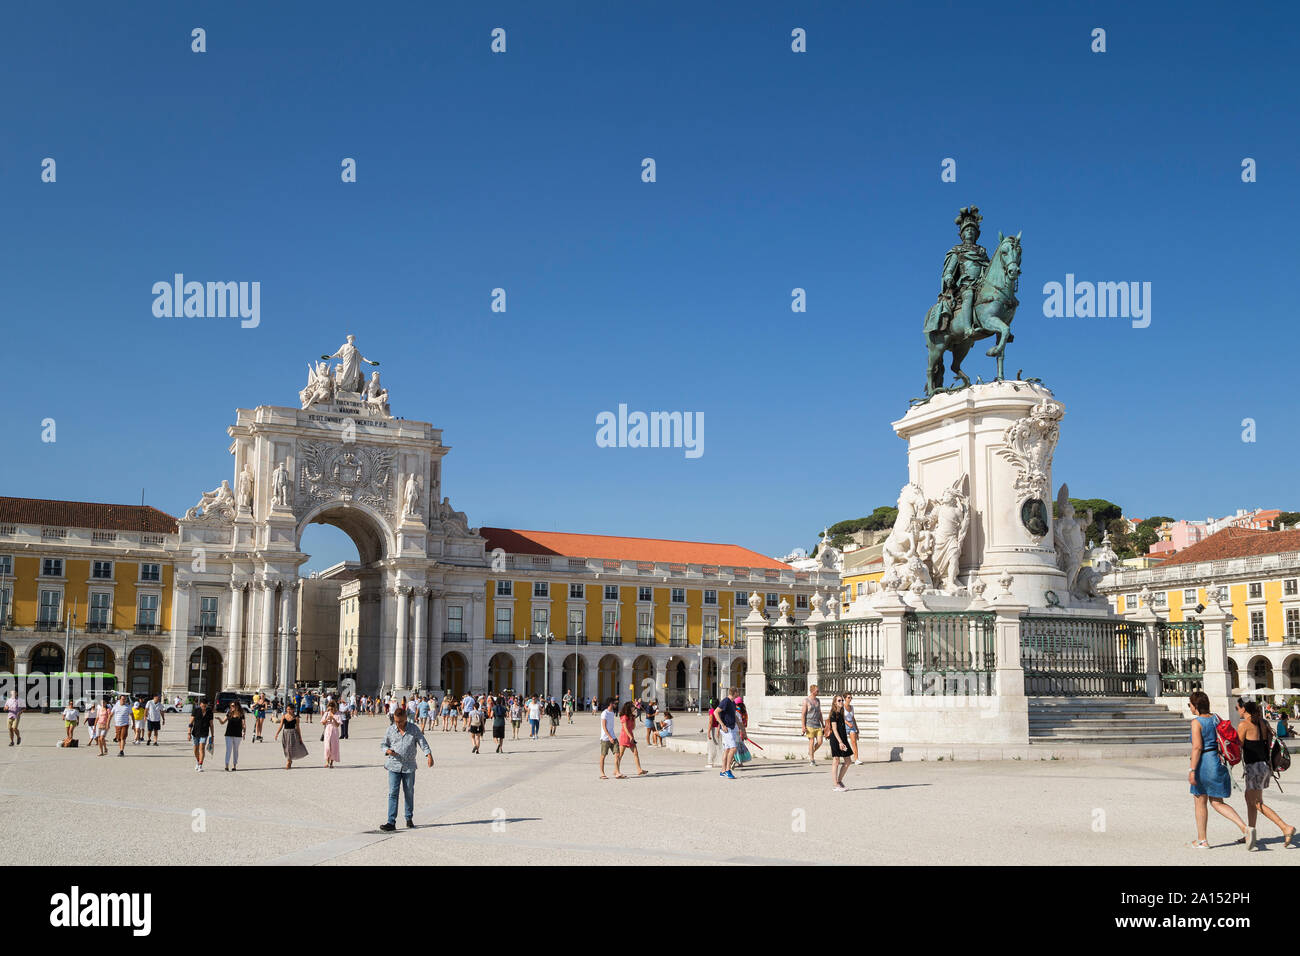 The 18th century Arco da Rua Augusta (triumphal arch gateway),  tourists and statue of King Jose I at the Praca do Comercio square in Lisbon, Portugal Stock Photo